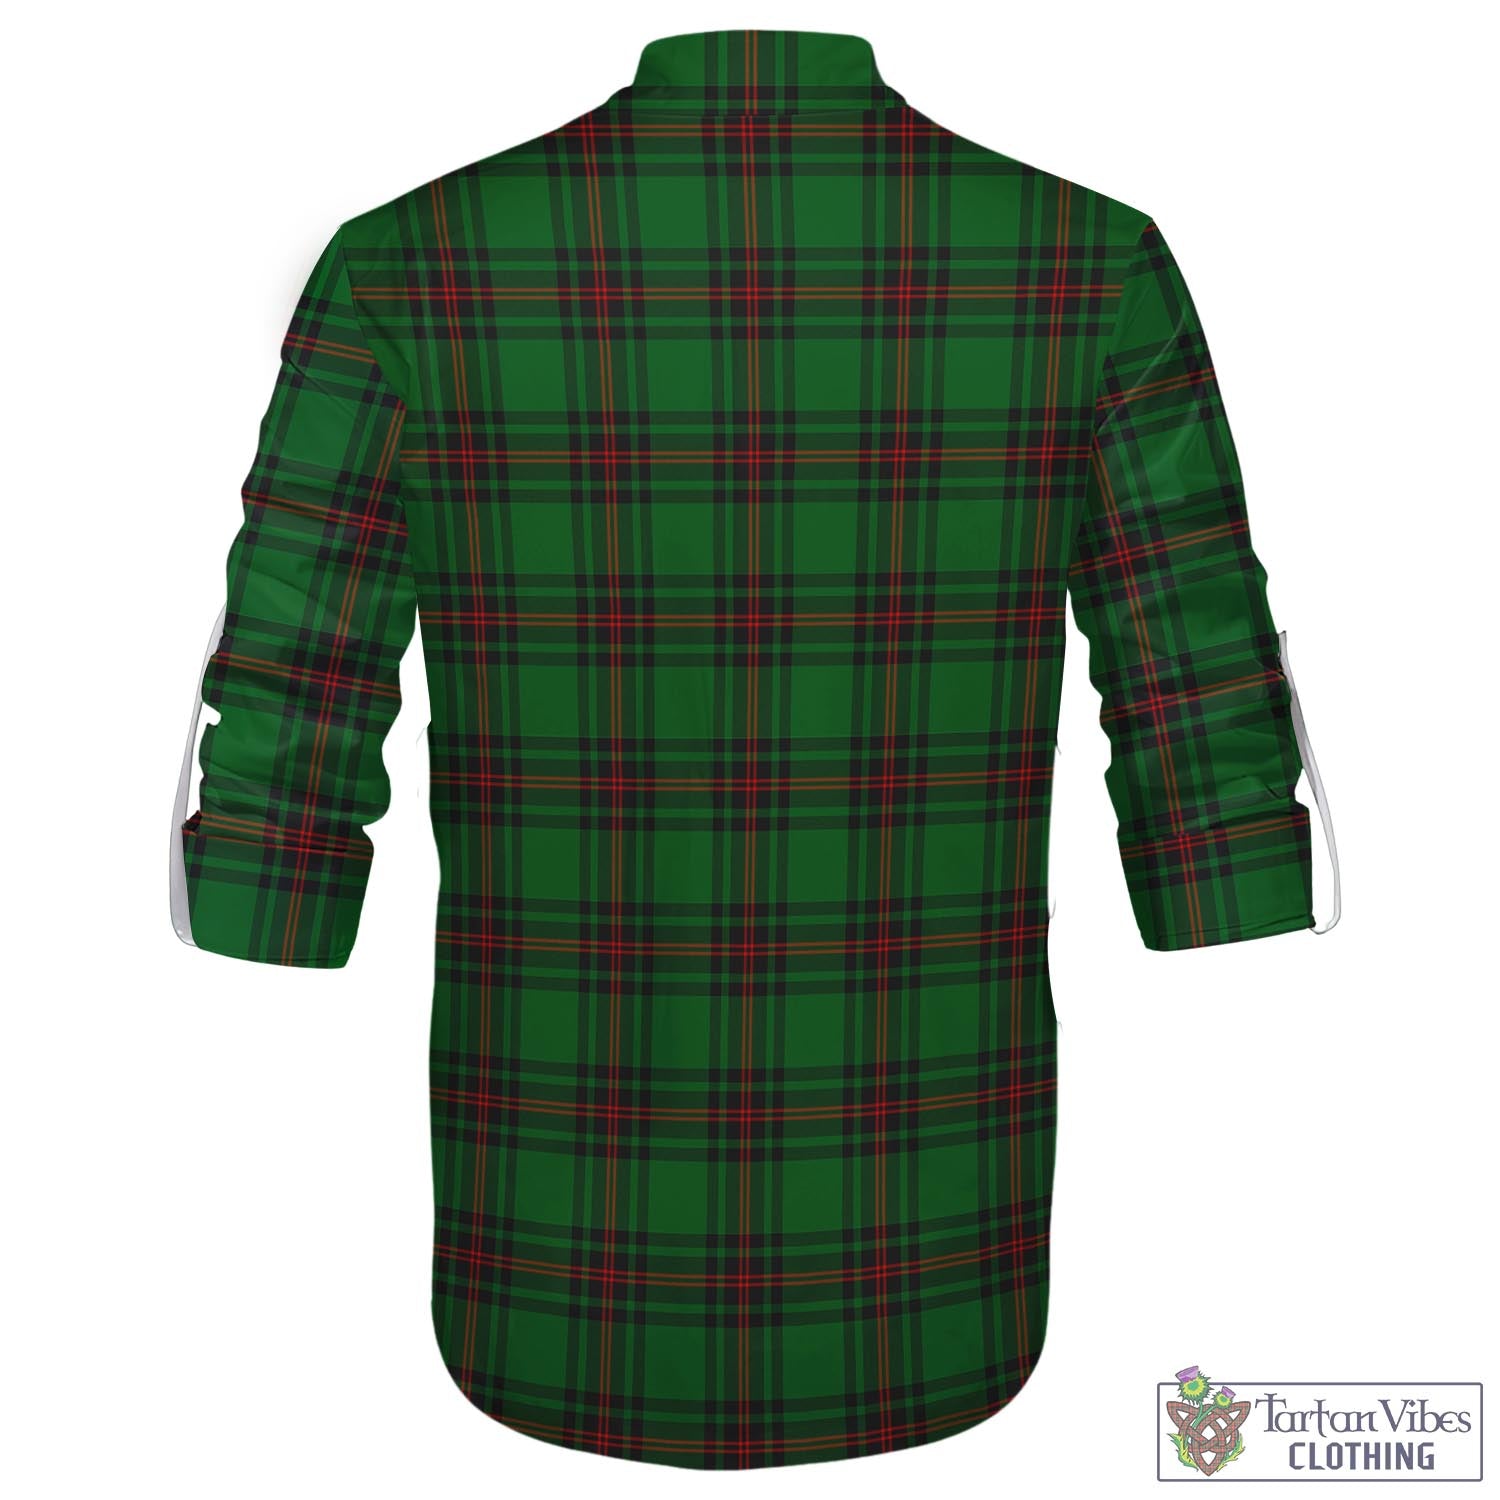 Tartan Vibes Clothing Kinloch Tartan Men's Scottish Traditional Jacobite Ghillie Kilt Shirt